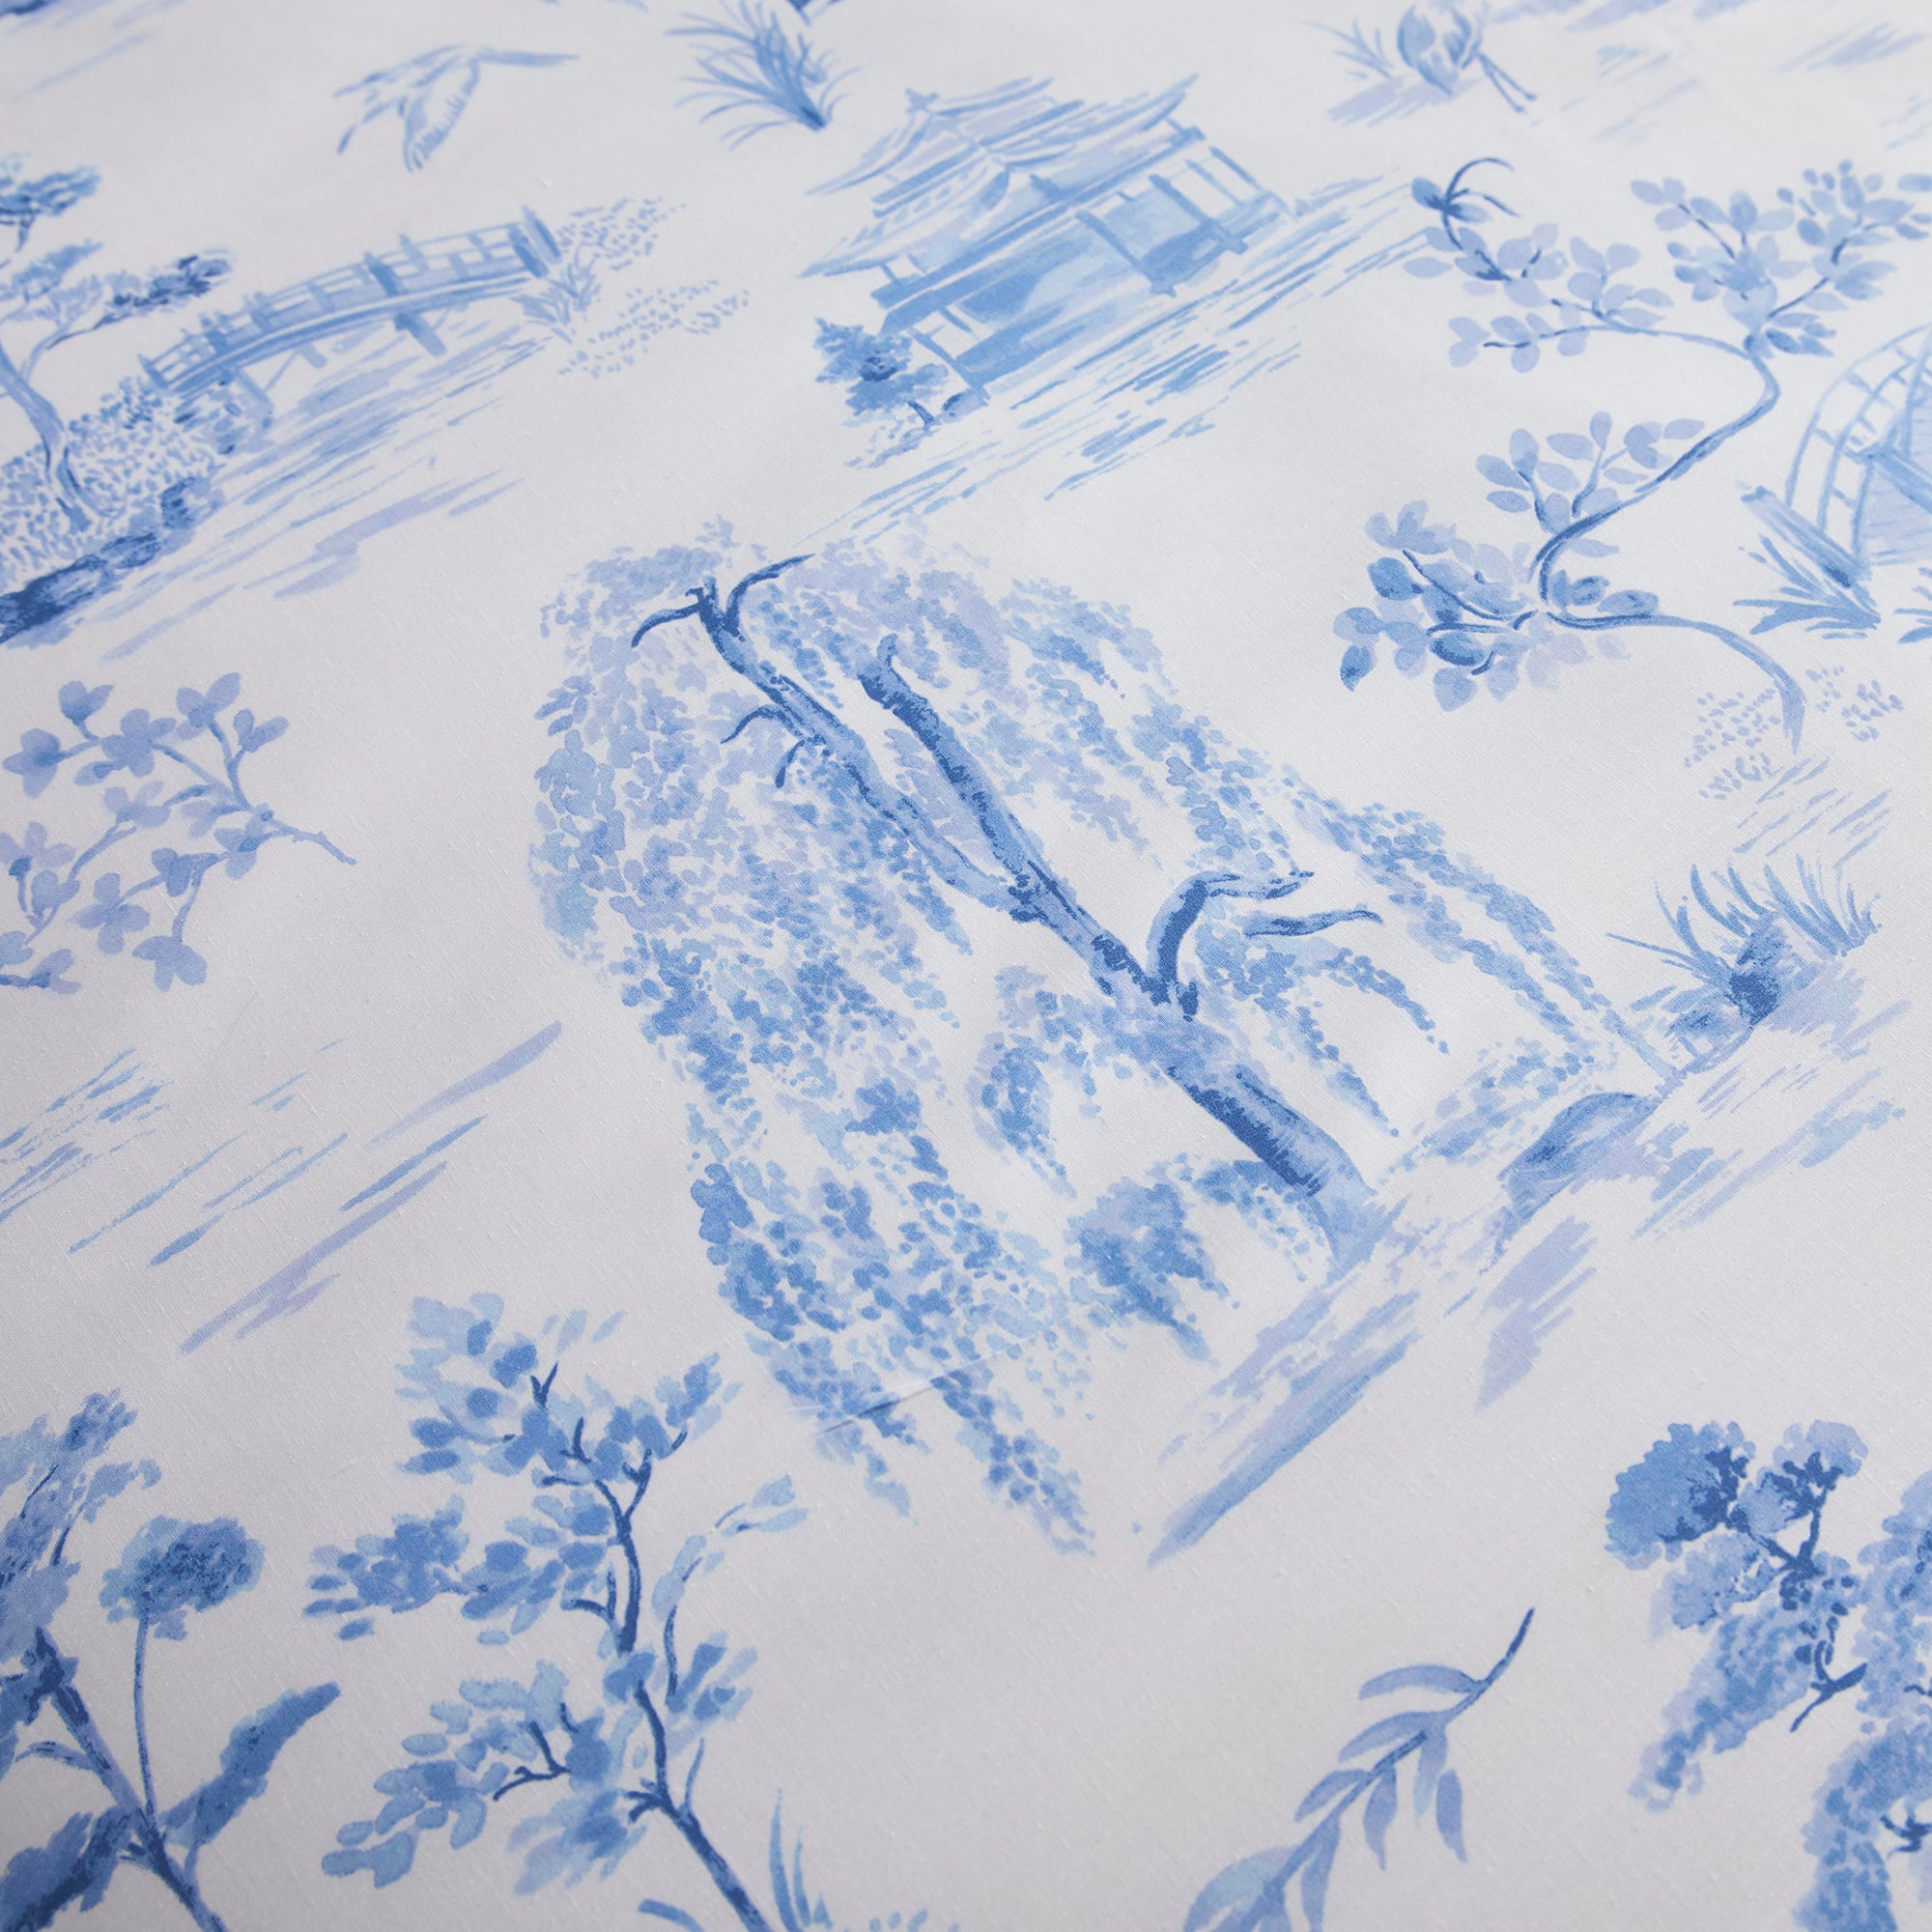 Duvet Cover Set Oriental Garden by D&D Design in Blue